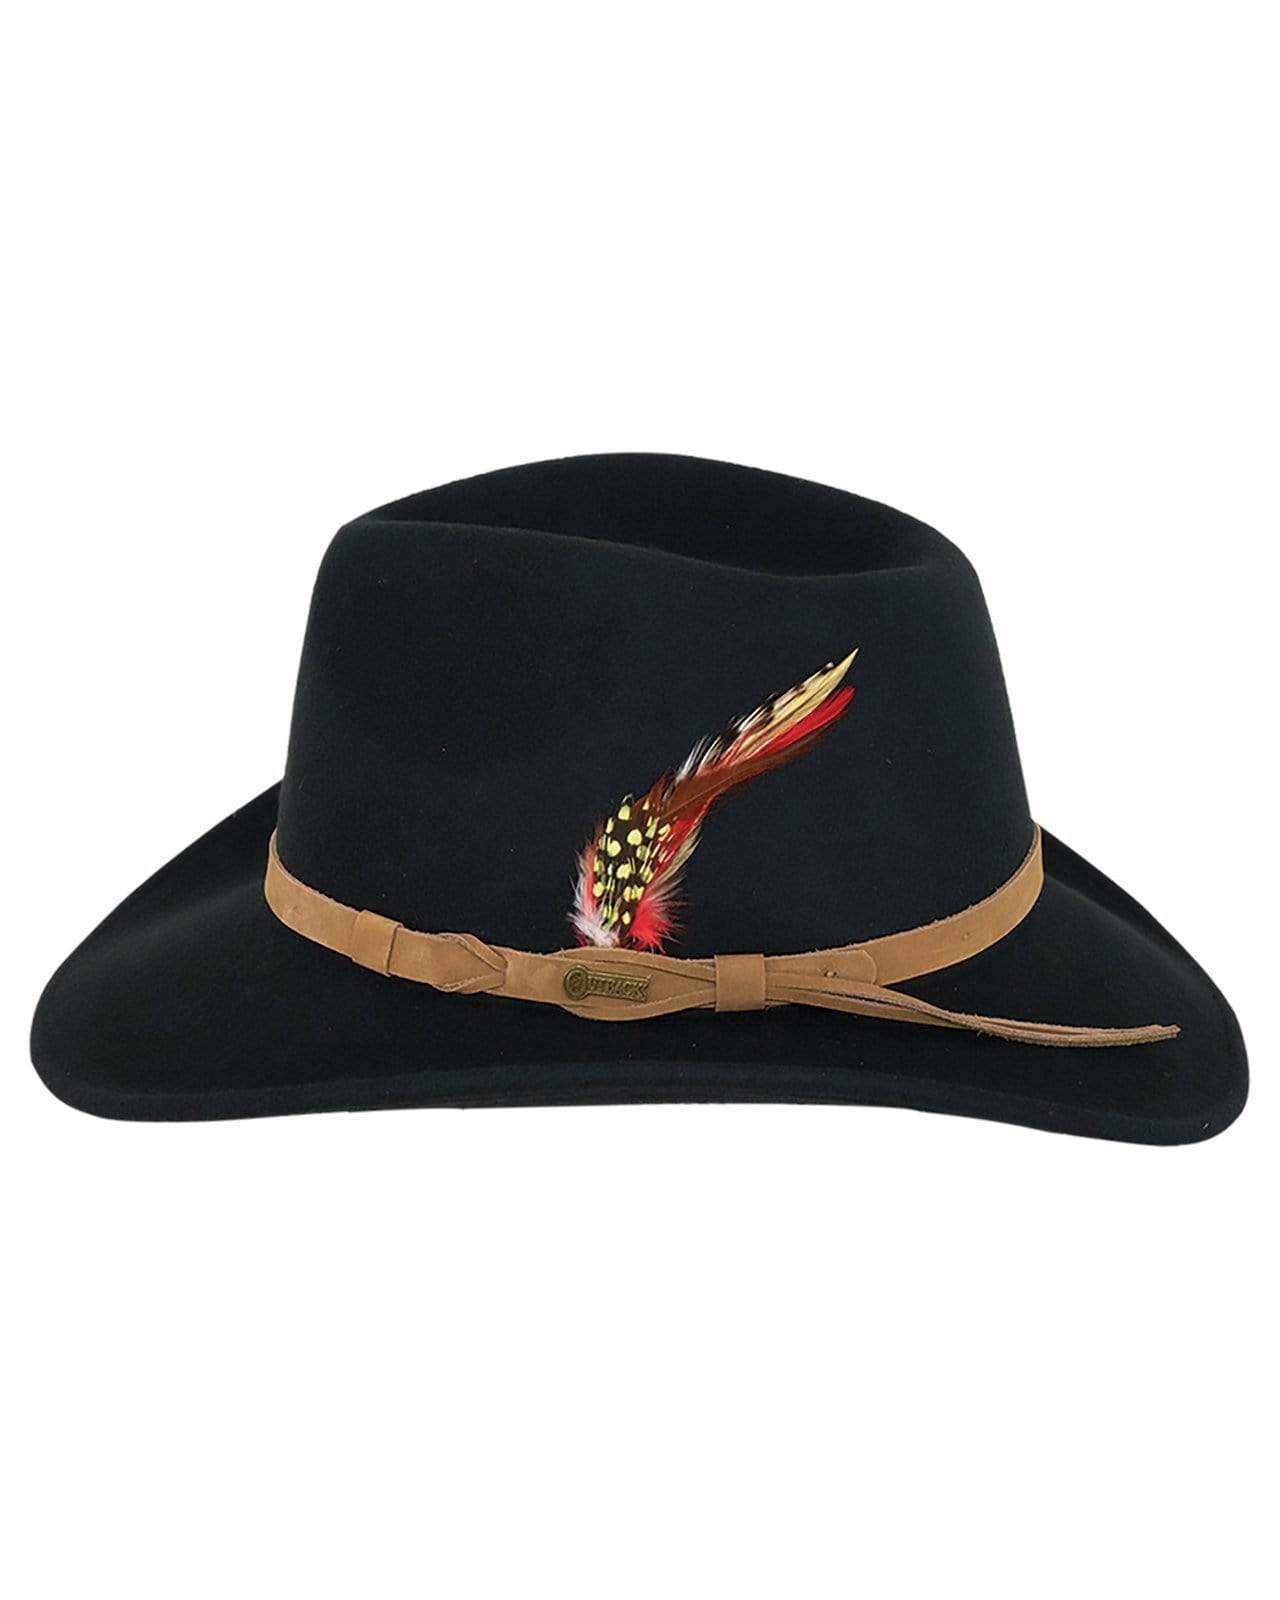 Outback Trading Company Randwick Hats